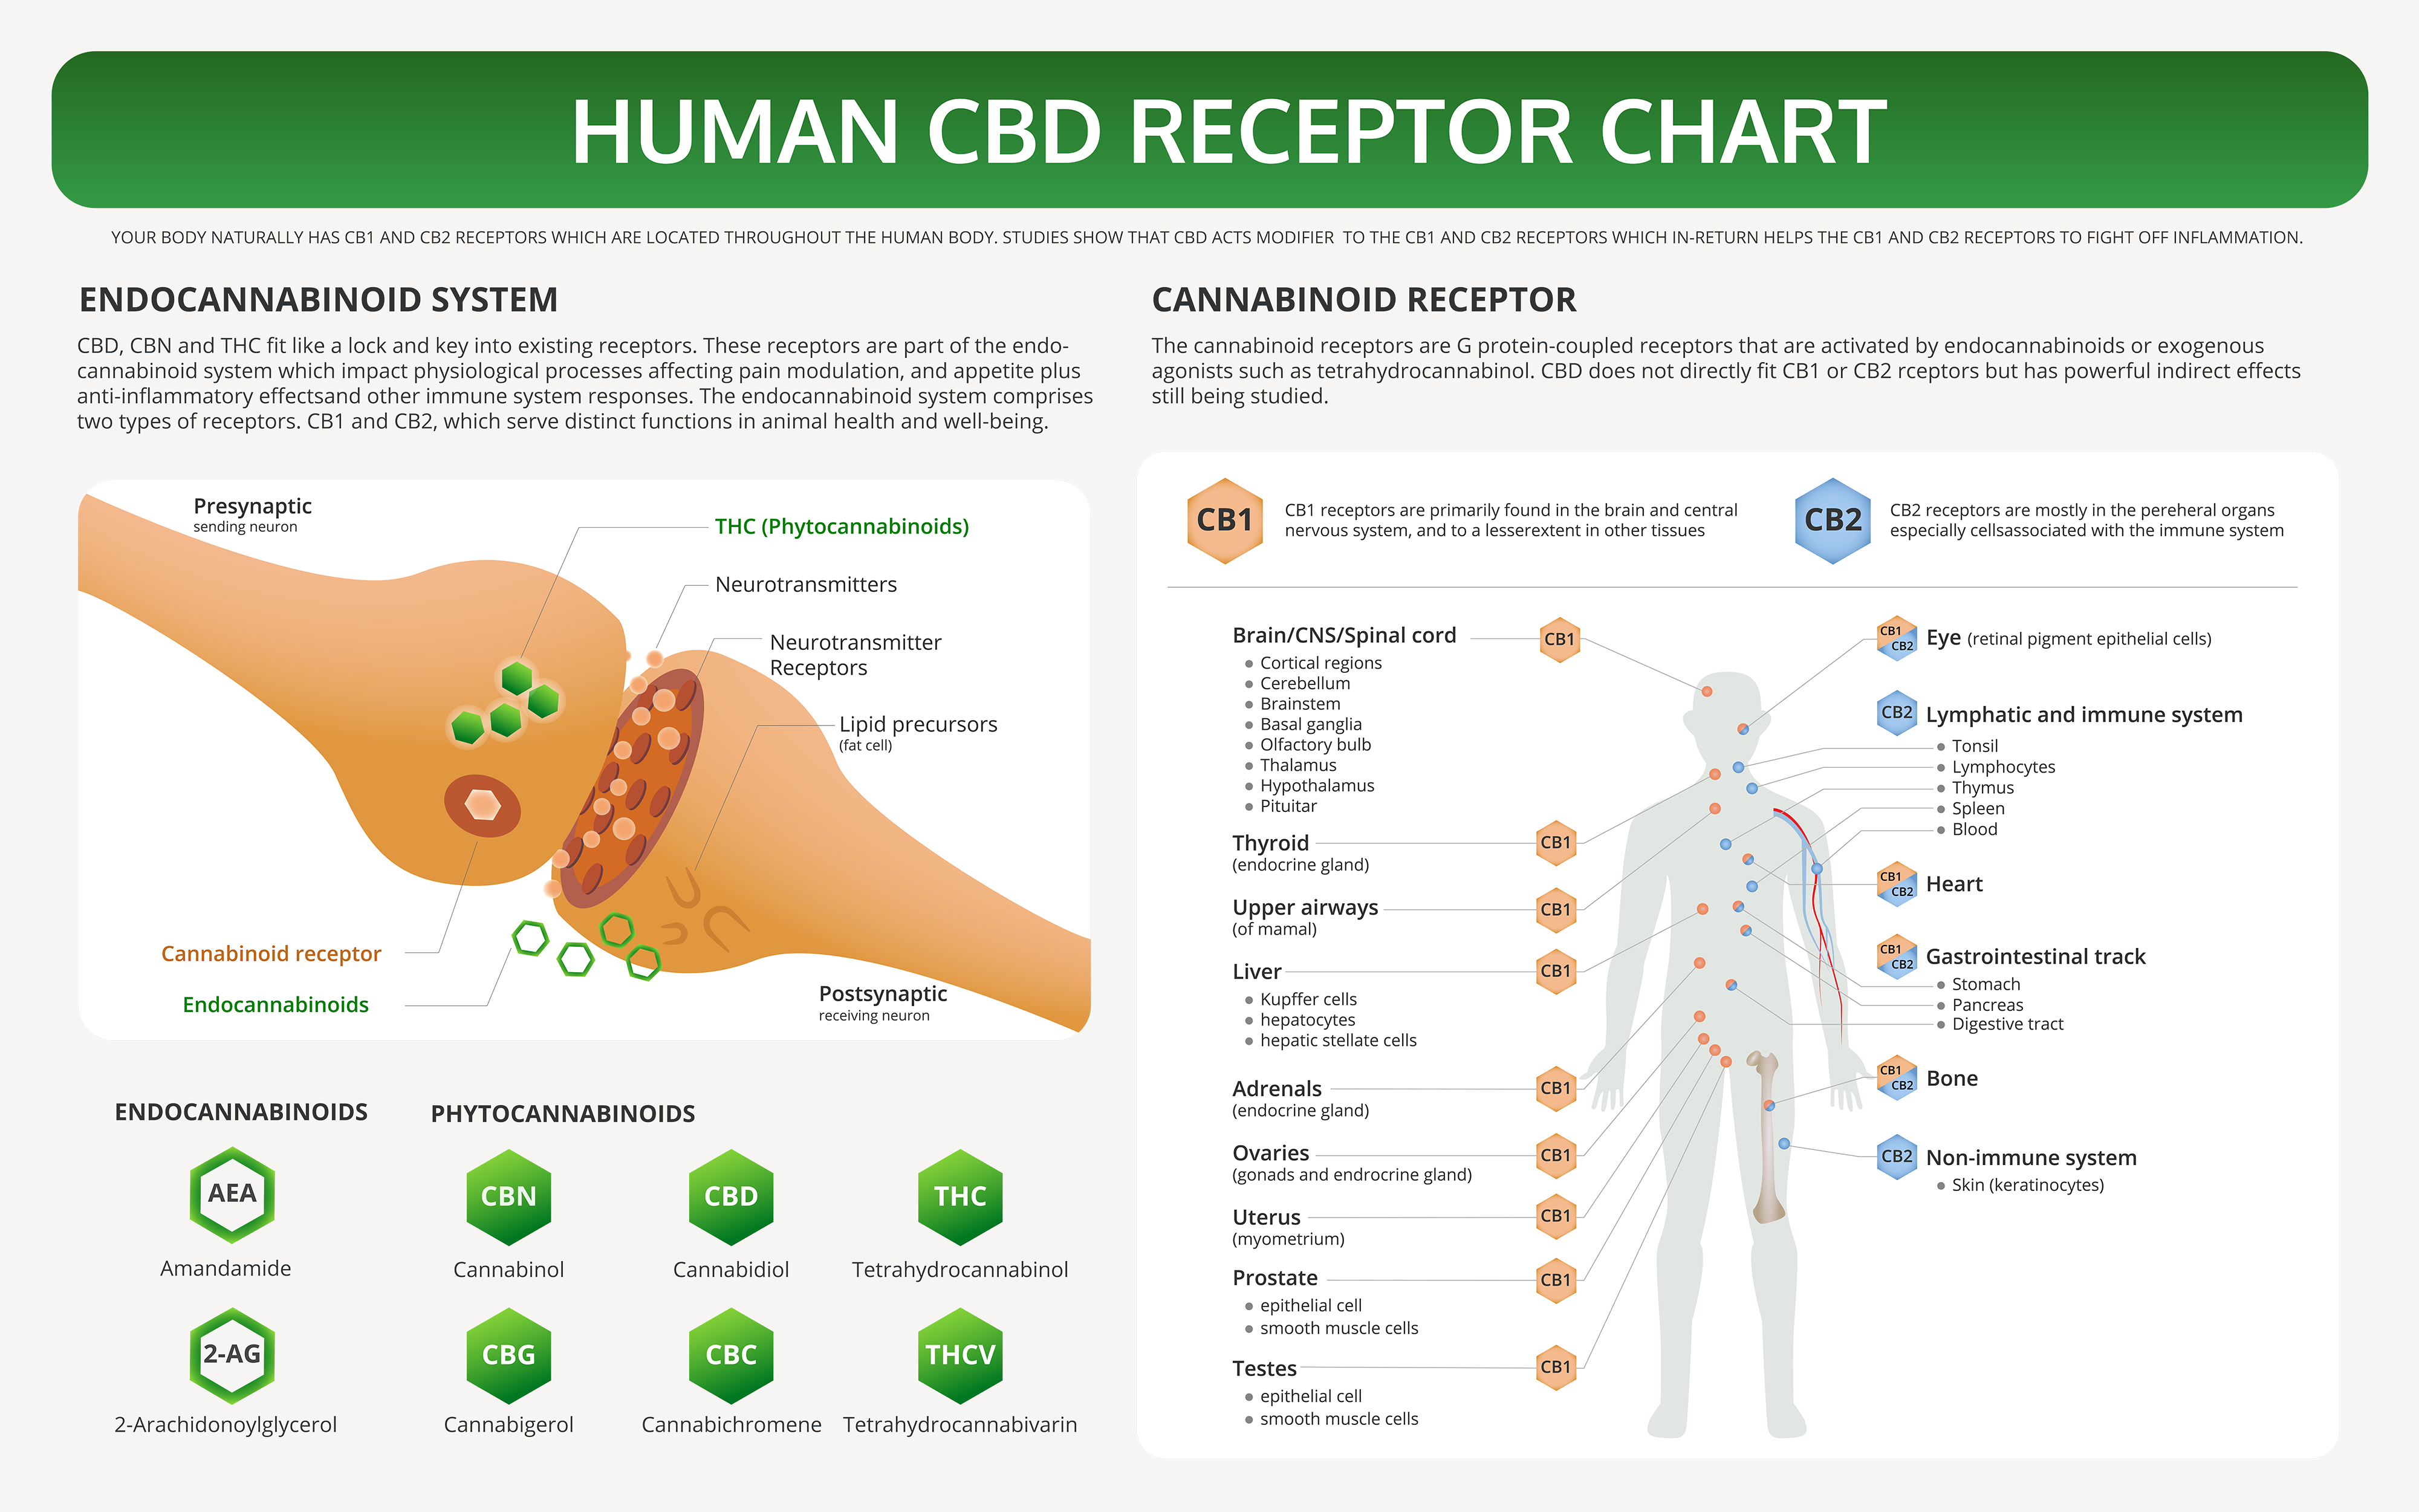 Human CBD Receptor Chart